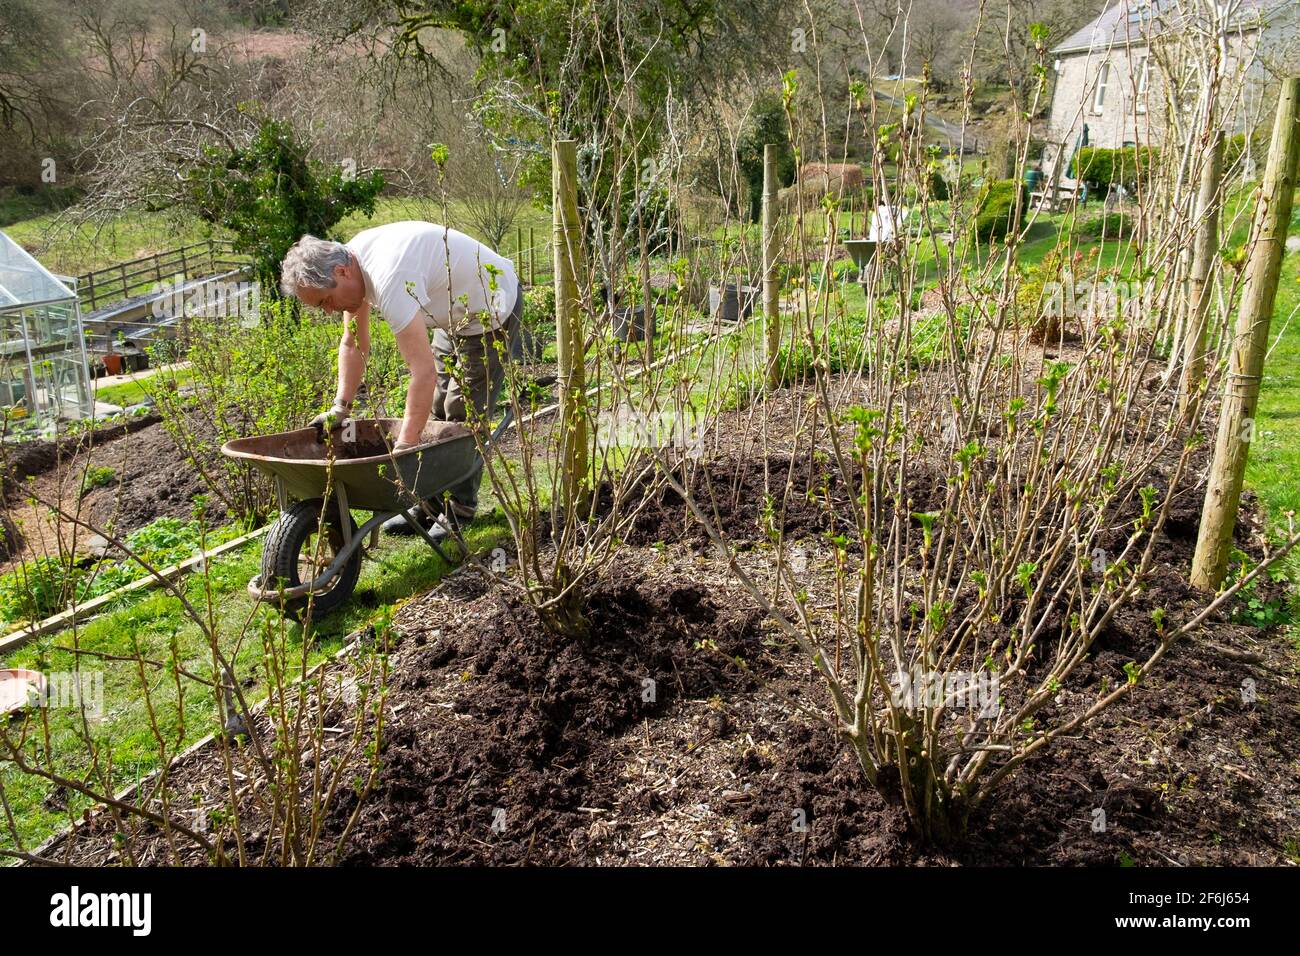 Older man male gardener wheelbarrow mulching raspberry canes raspberries compost mulch in spring April garden Wales UK Great Britain 2021 KATHY DEWITT Stock Photo